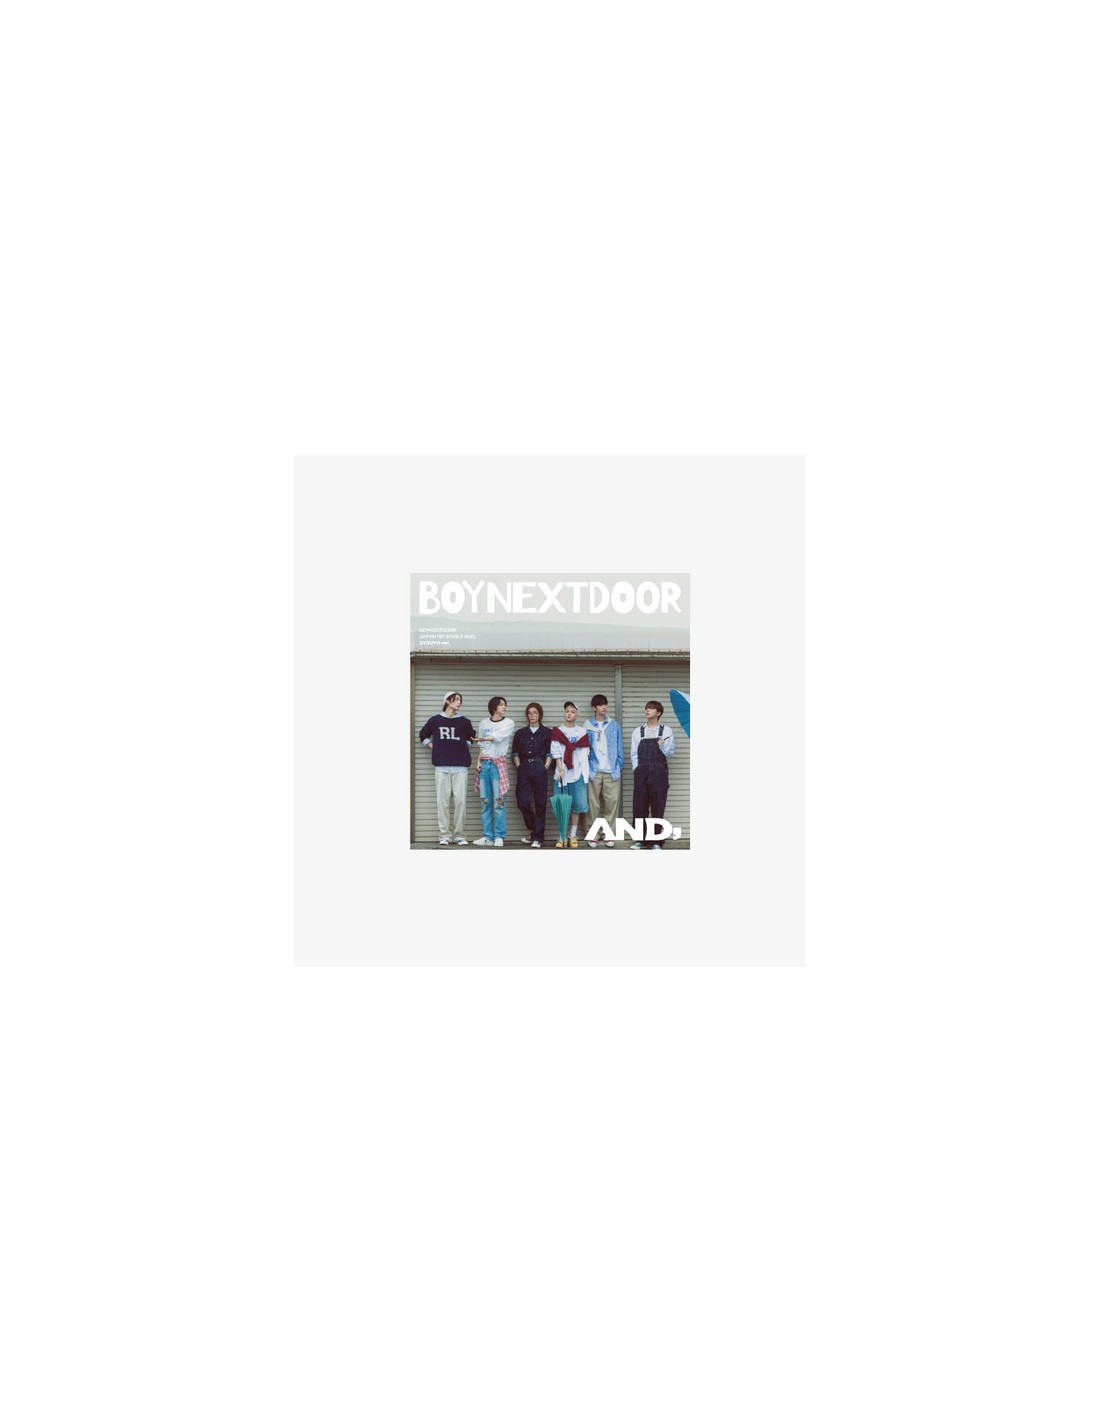 [Japanese Edition] BOYNEXTDOOR 1st Single Album - AND, (STANDARD) CD  kpoptown.com